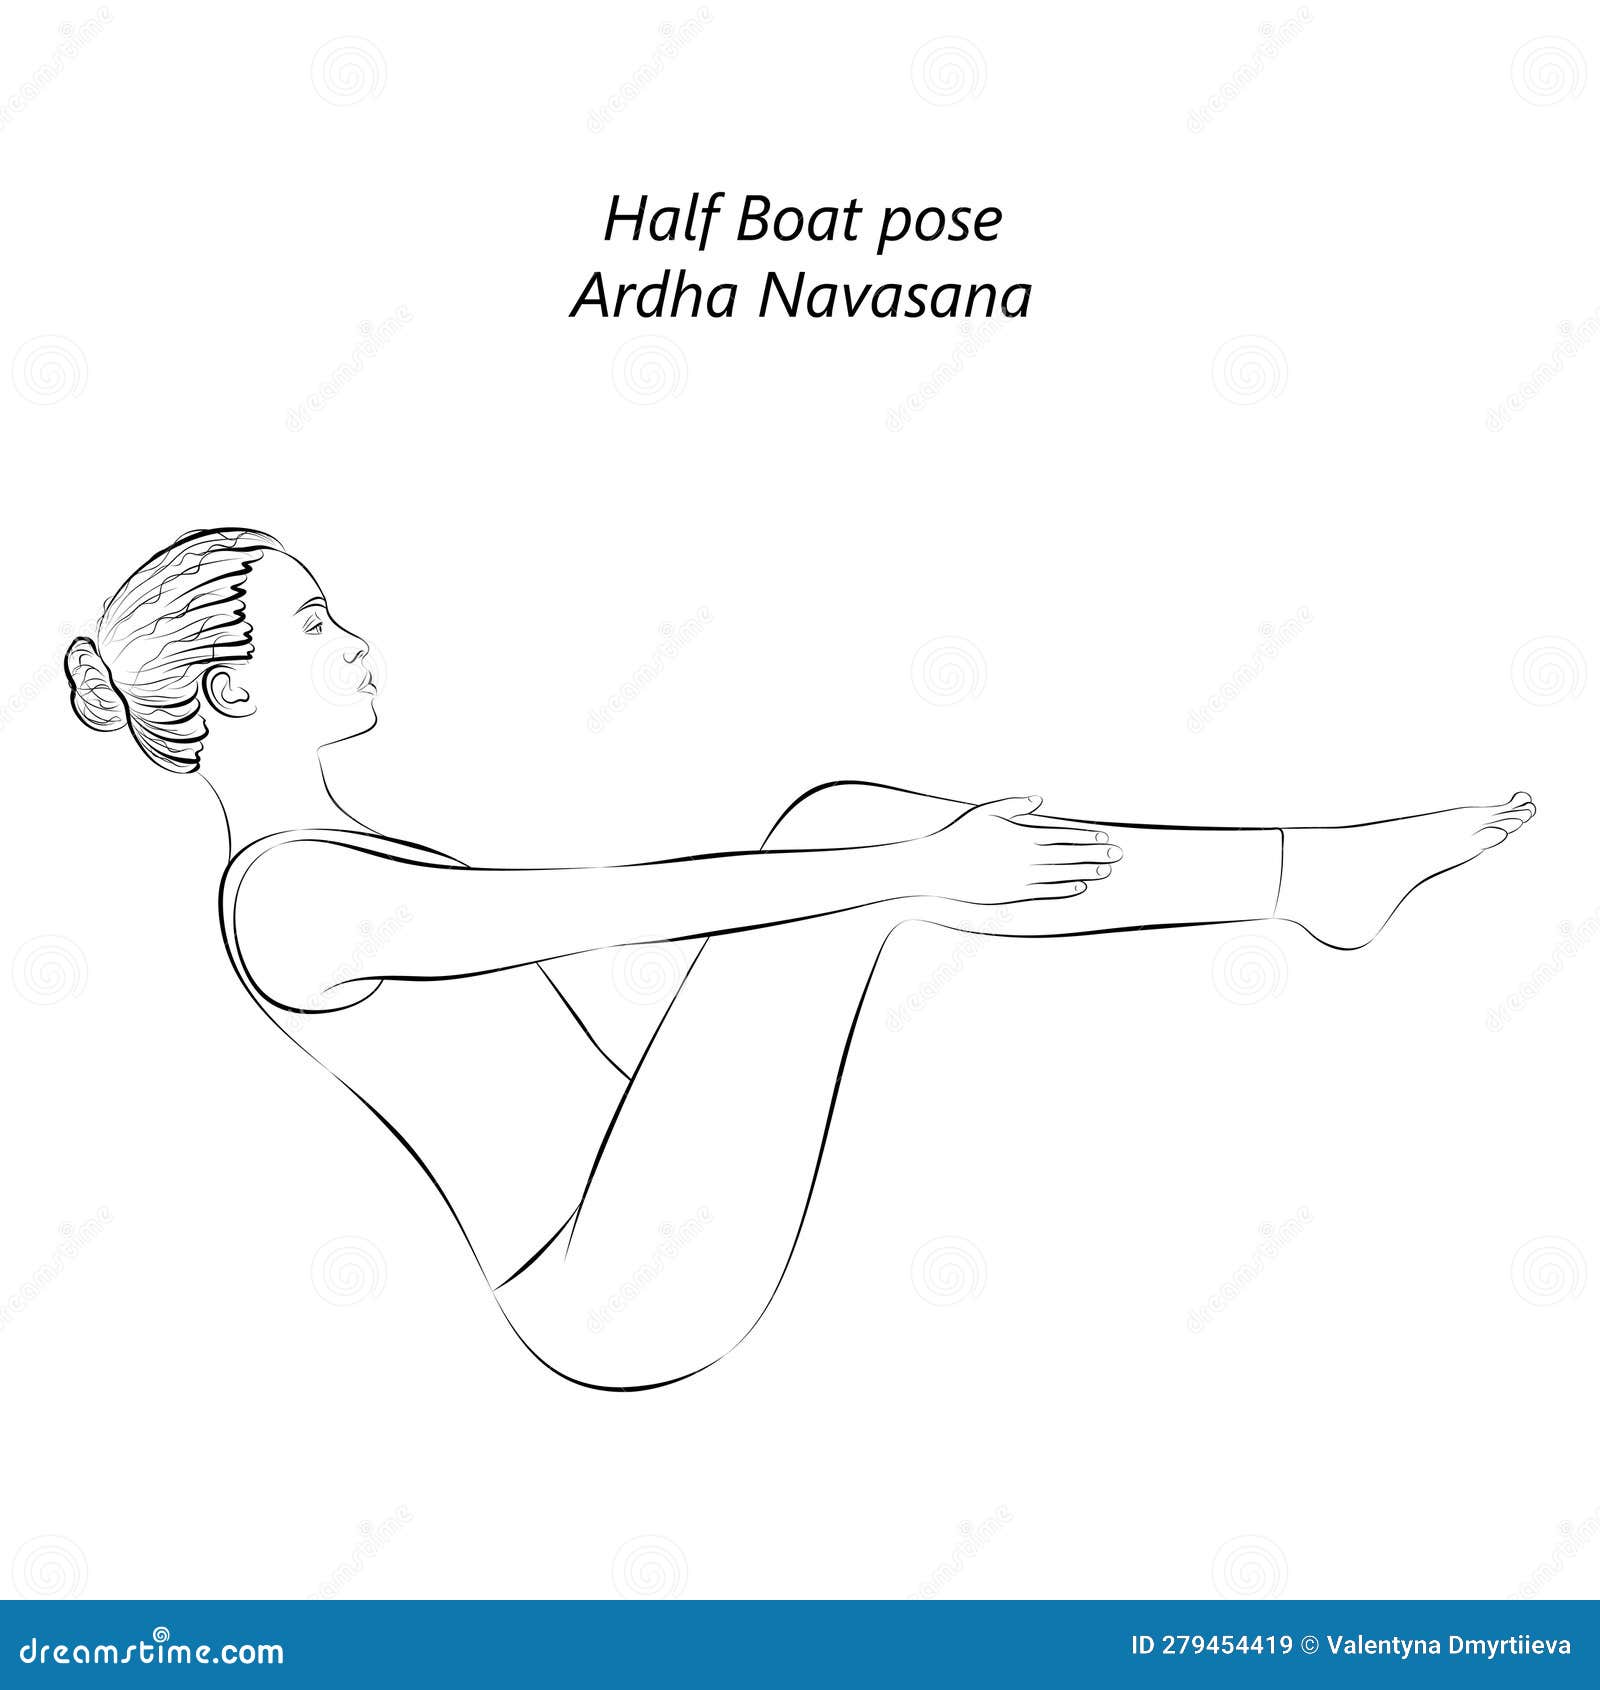 Ardha Navasana - Half boat pose | Yoga, Boat pose, Poses